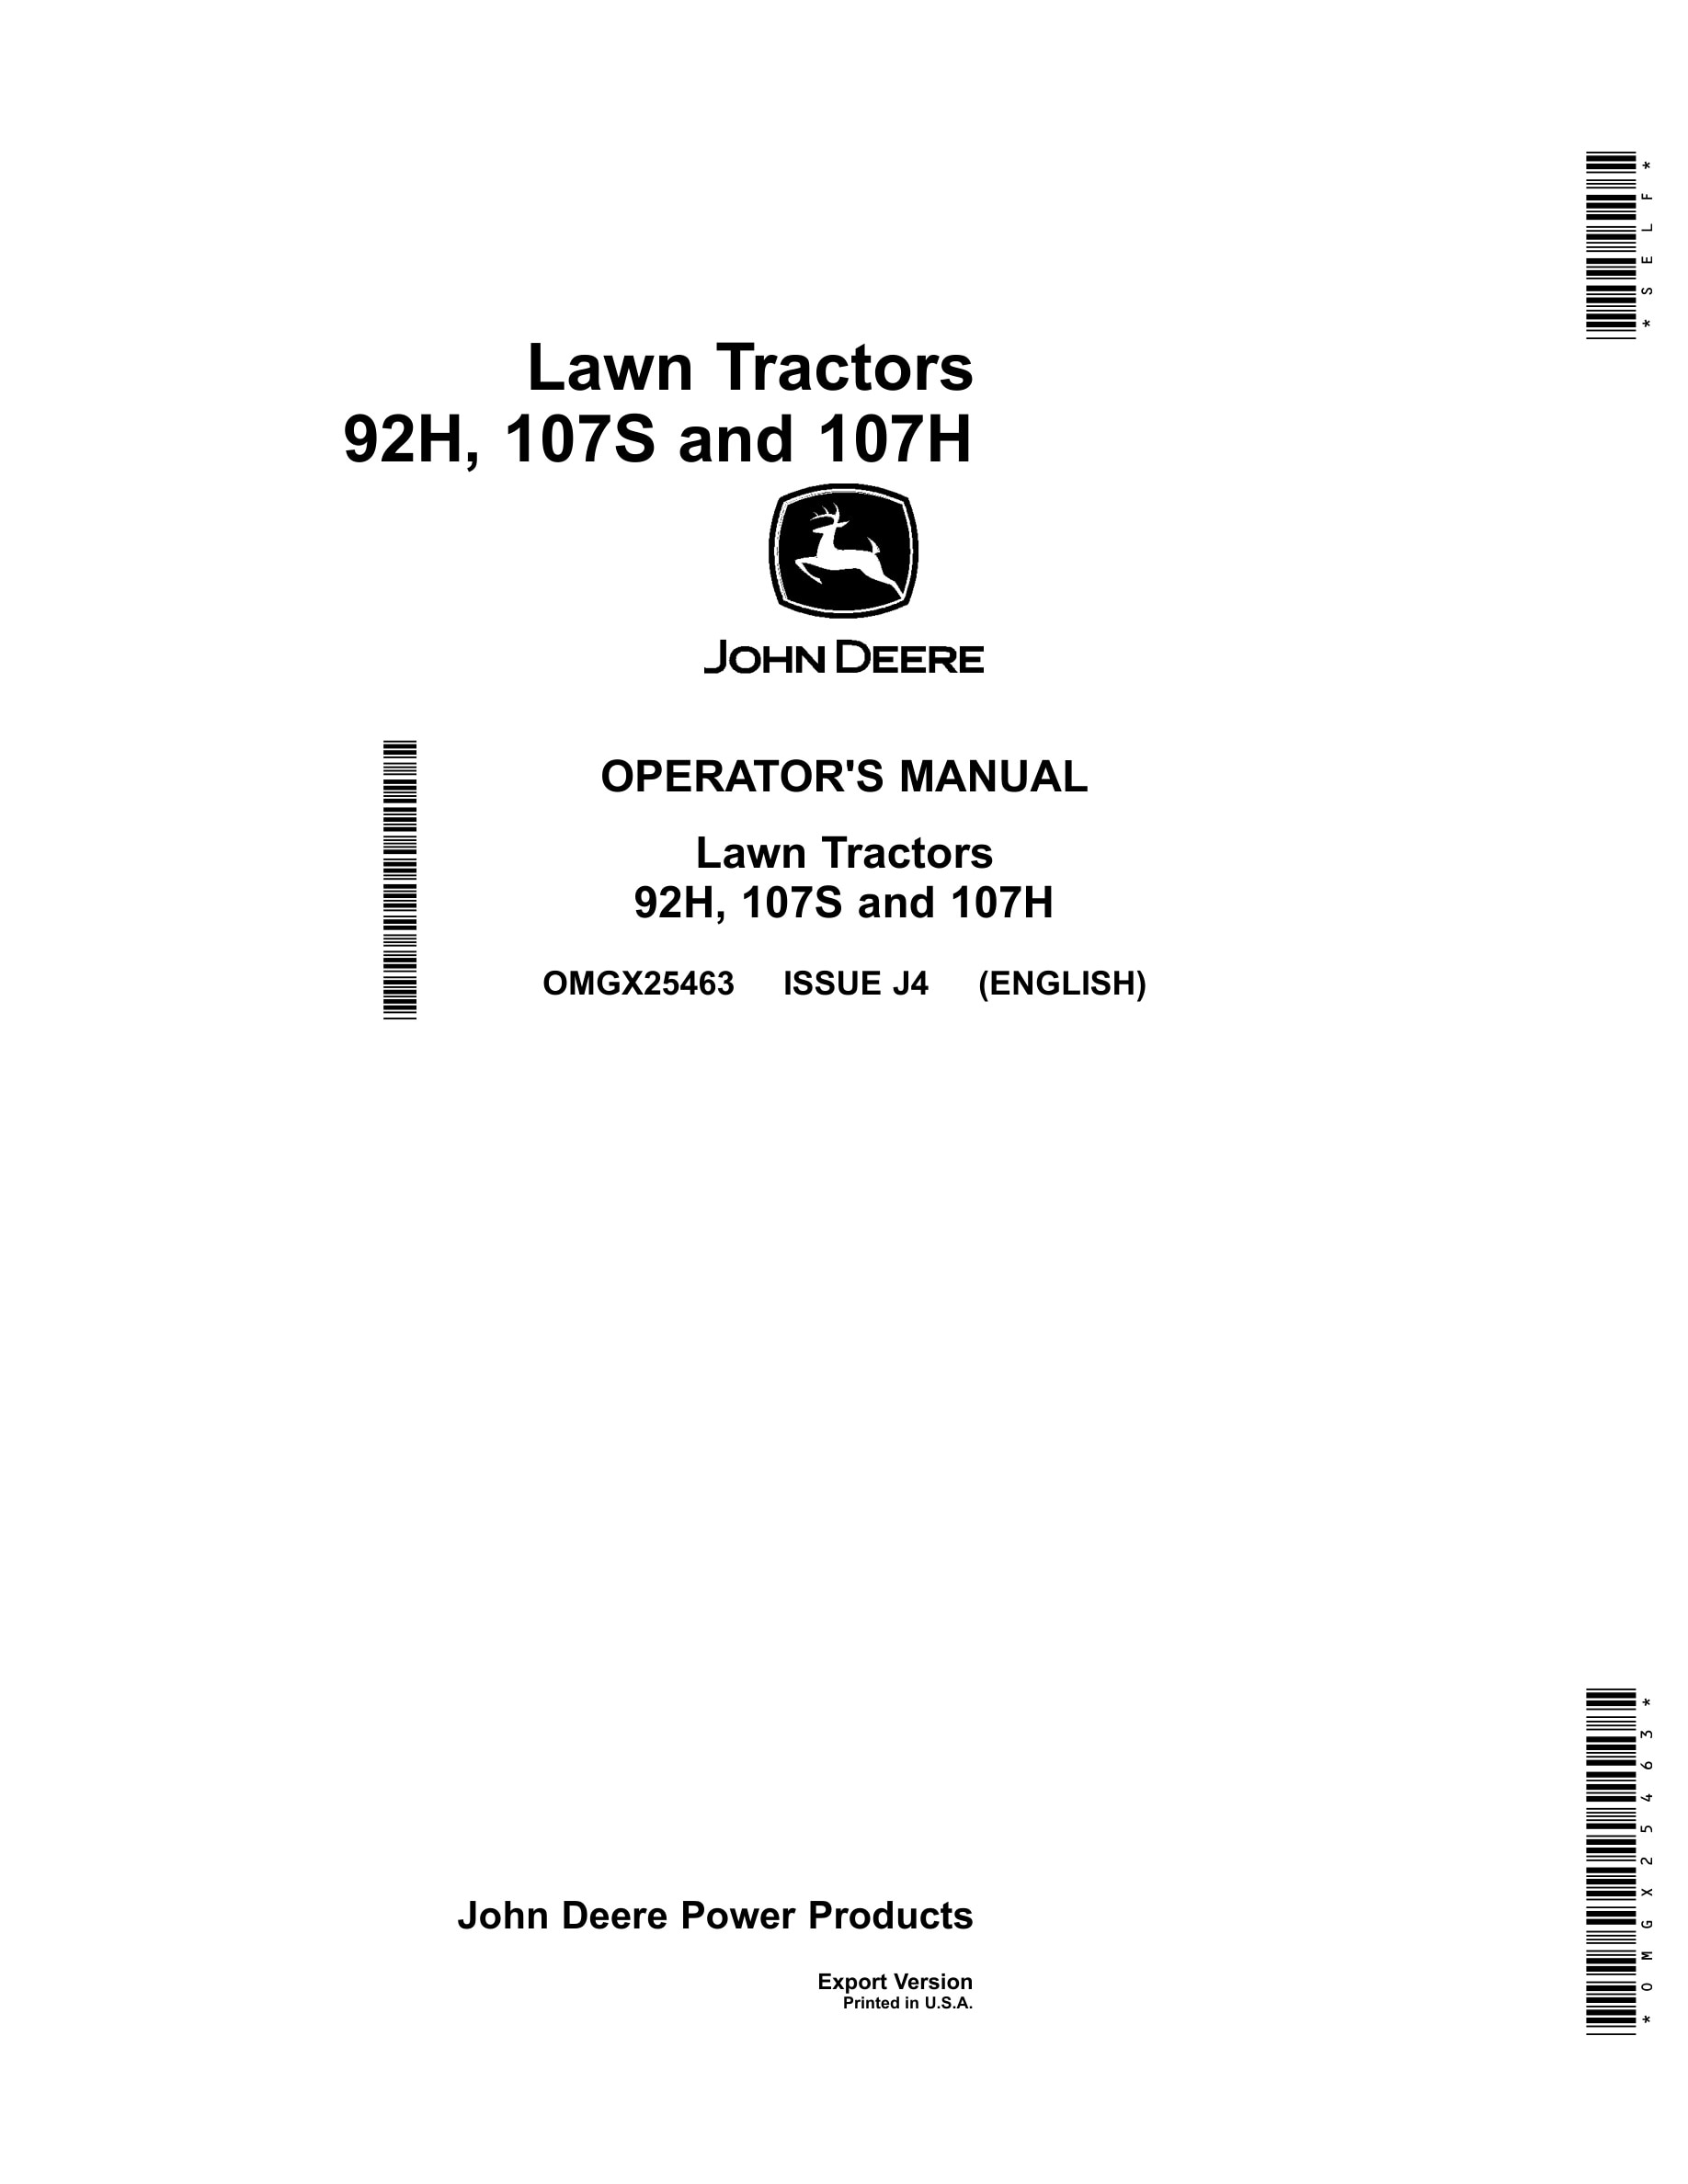 John Deere 92h, 107s And 107h Lawn Tractors Operator Manuals OMGX25463-1